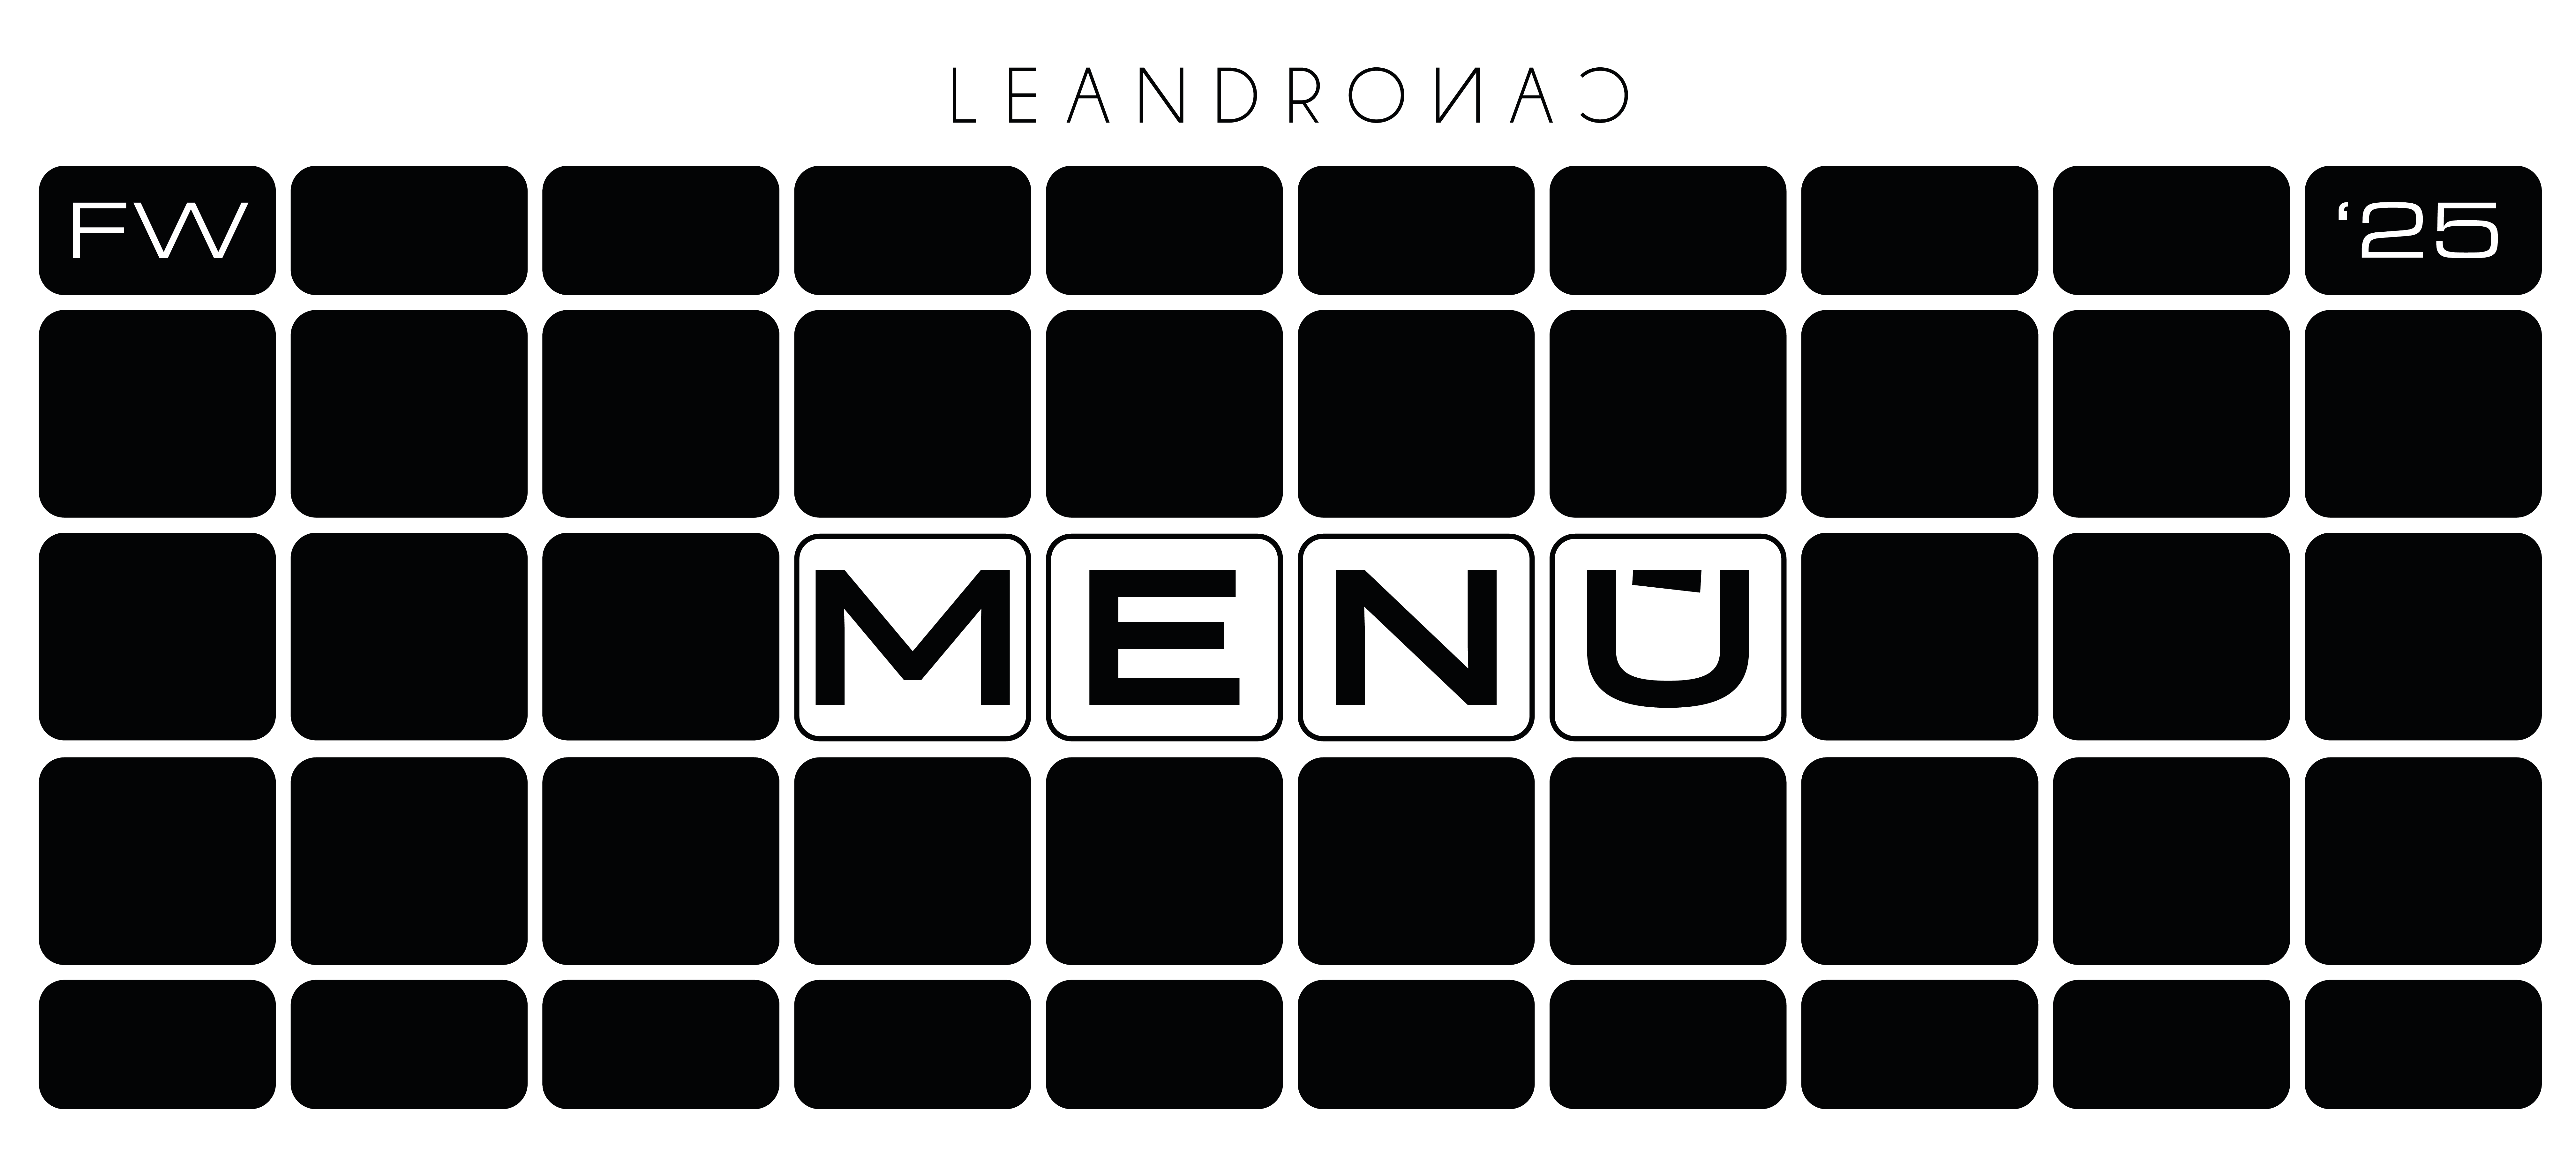 MENU-LeandroCano-marca-11